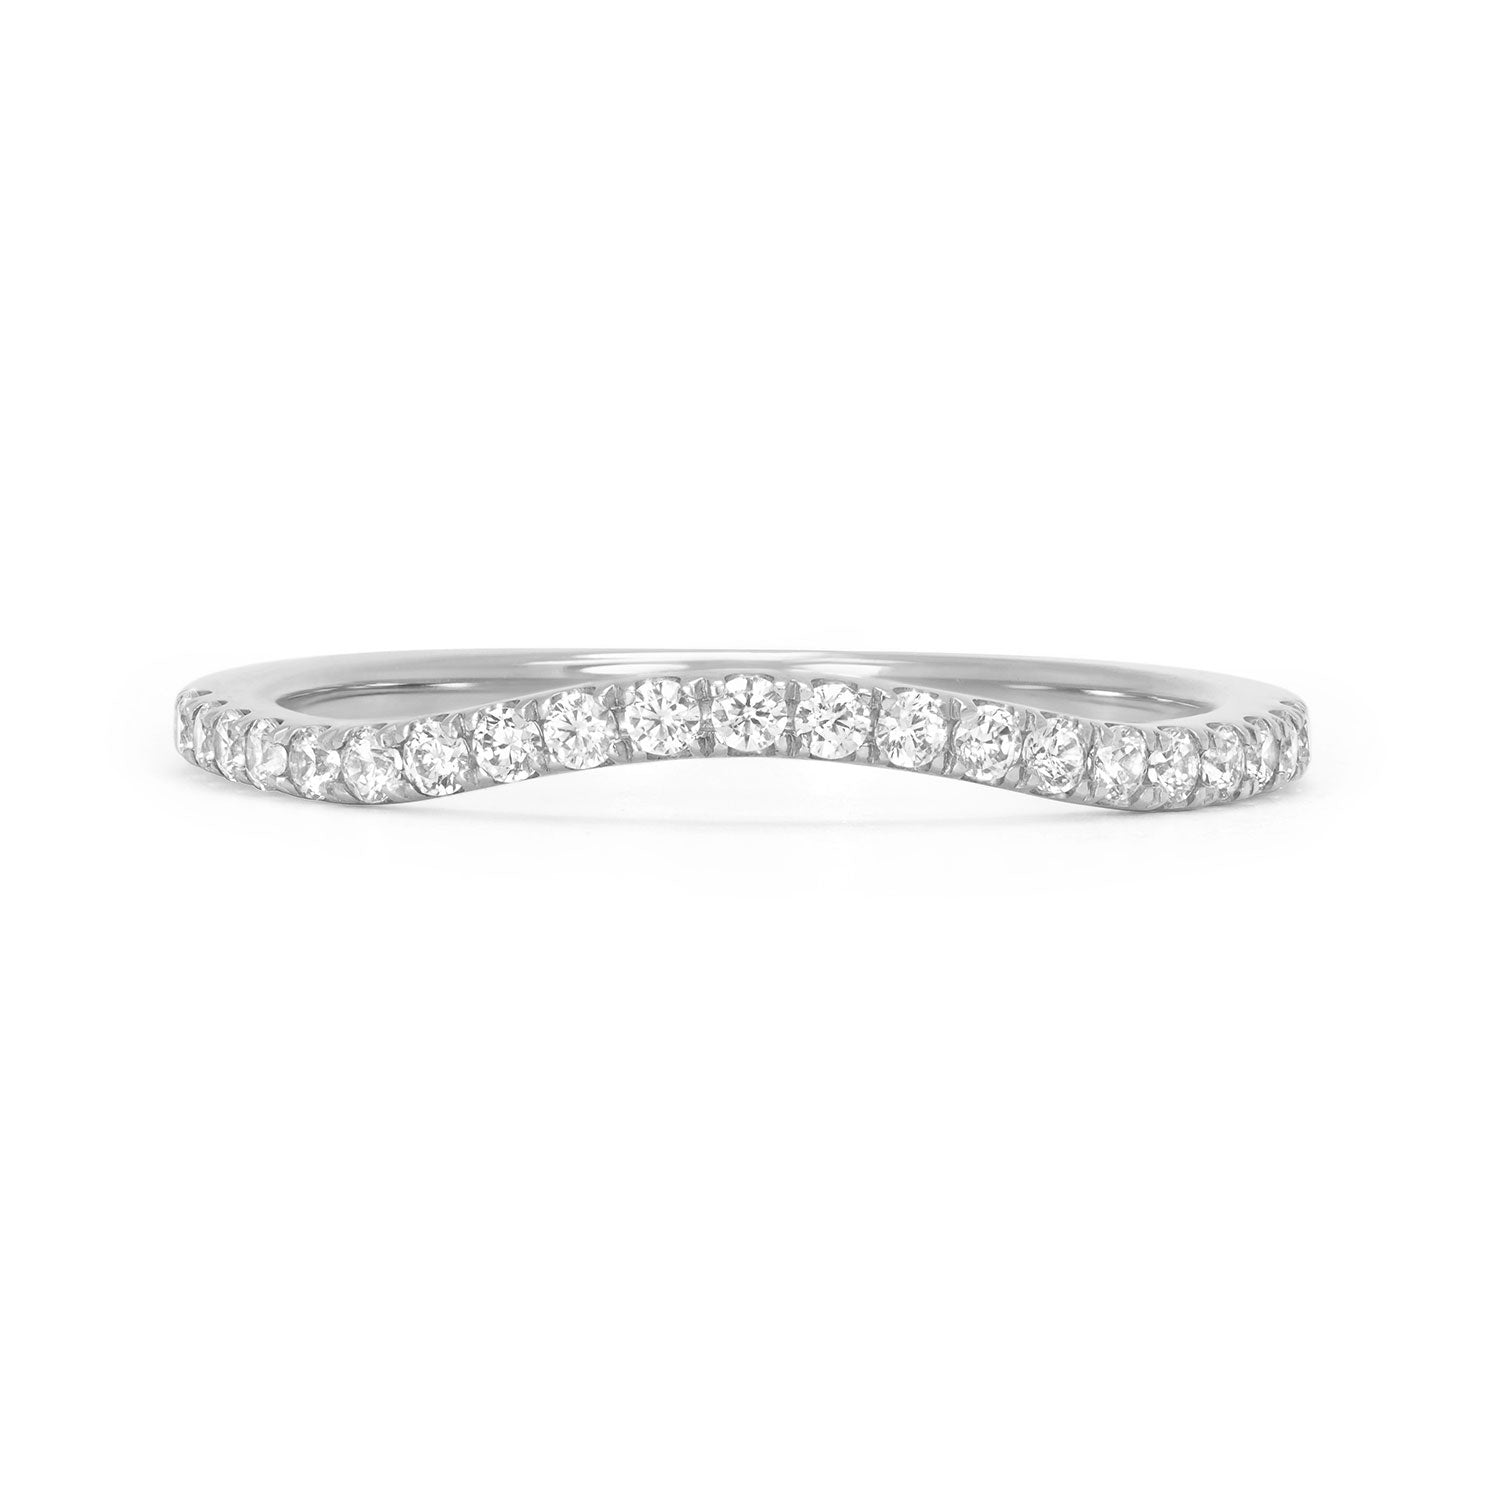 Lebrusan Studio Accademia Microset Ethical Diamond Platinum Wedding Ring, conflict-free diamonds and recycled platinum 